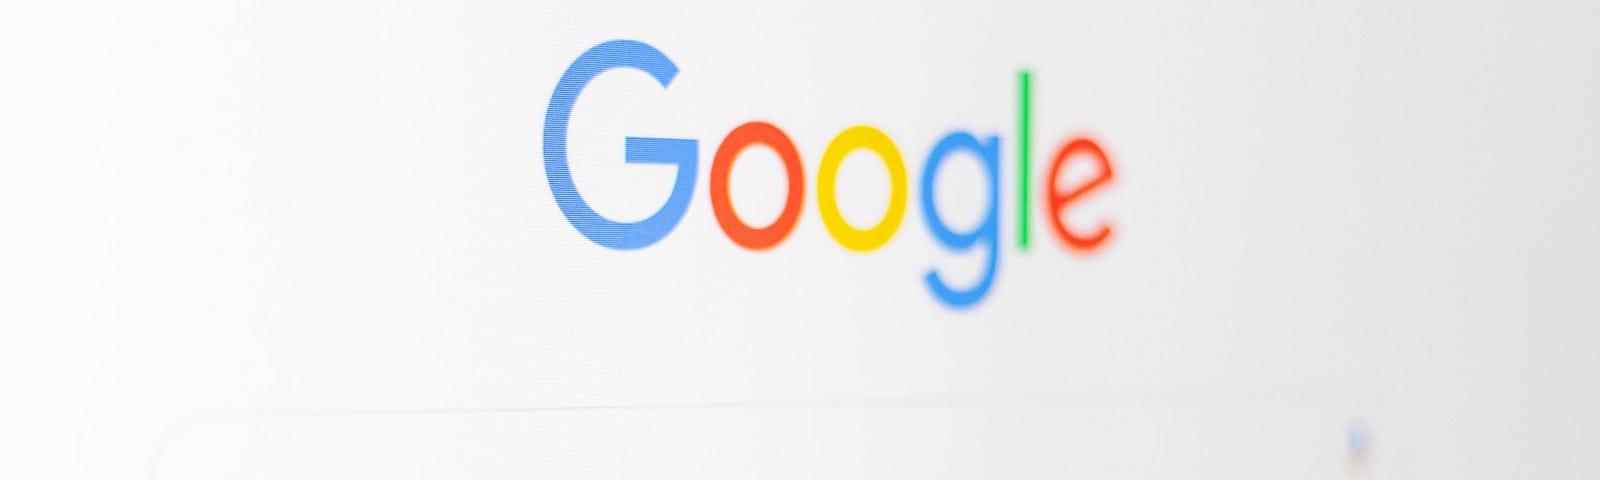 Google logo and search bar